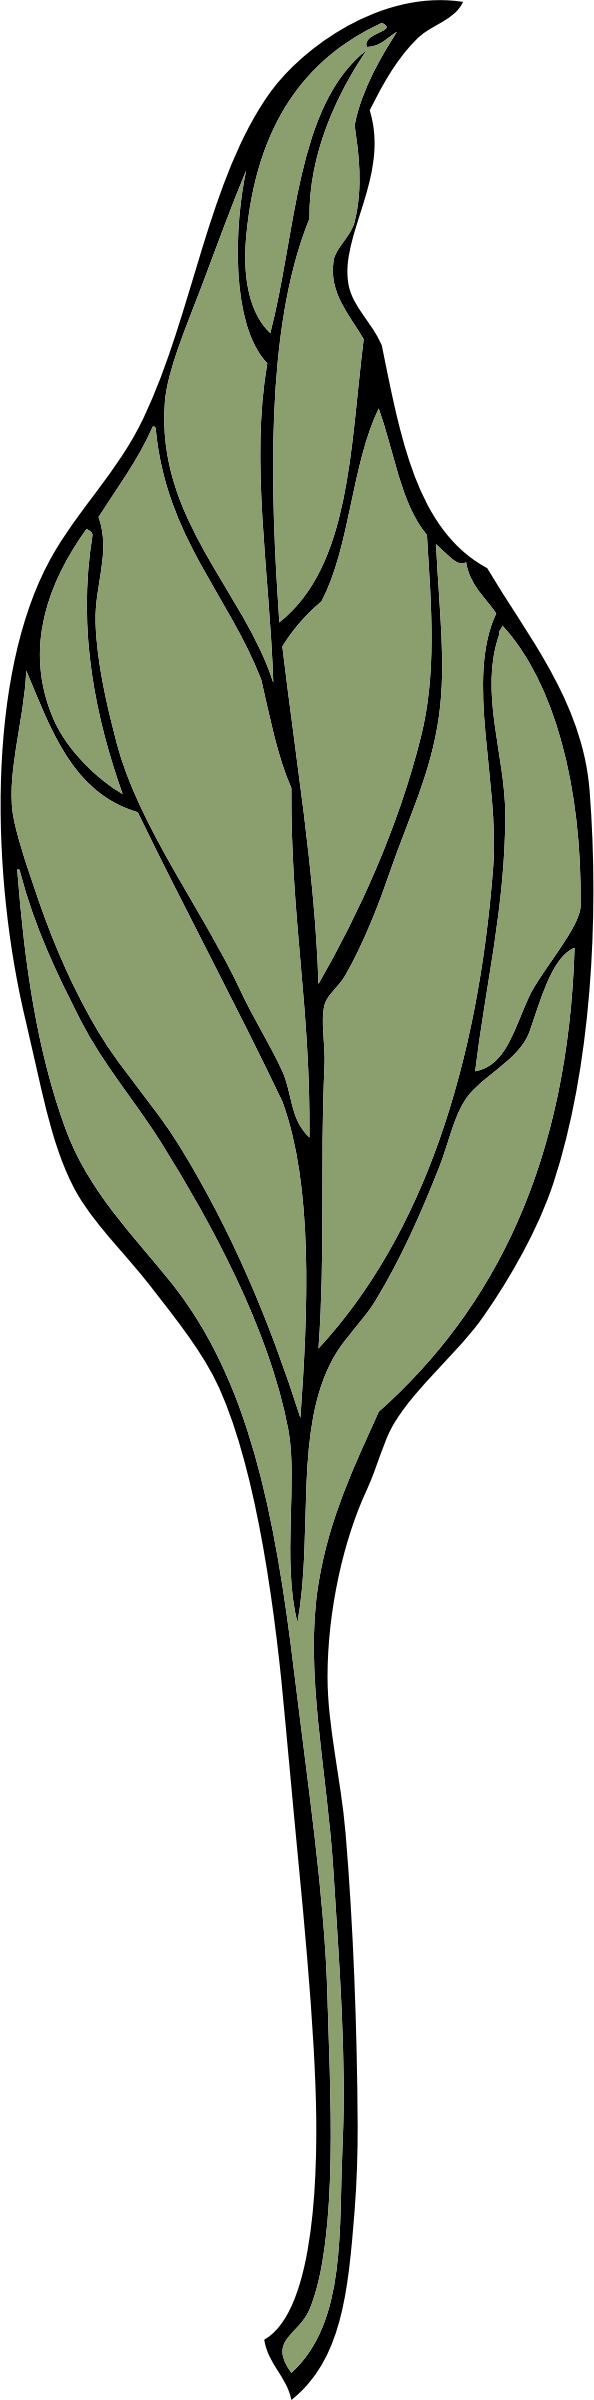 Ivy clipart green stem. 